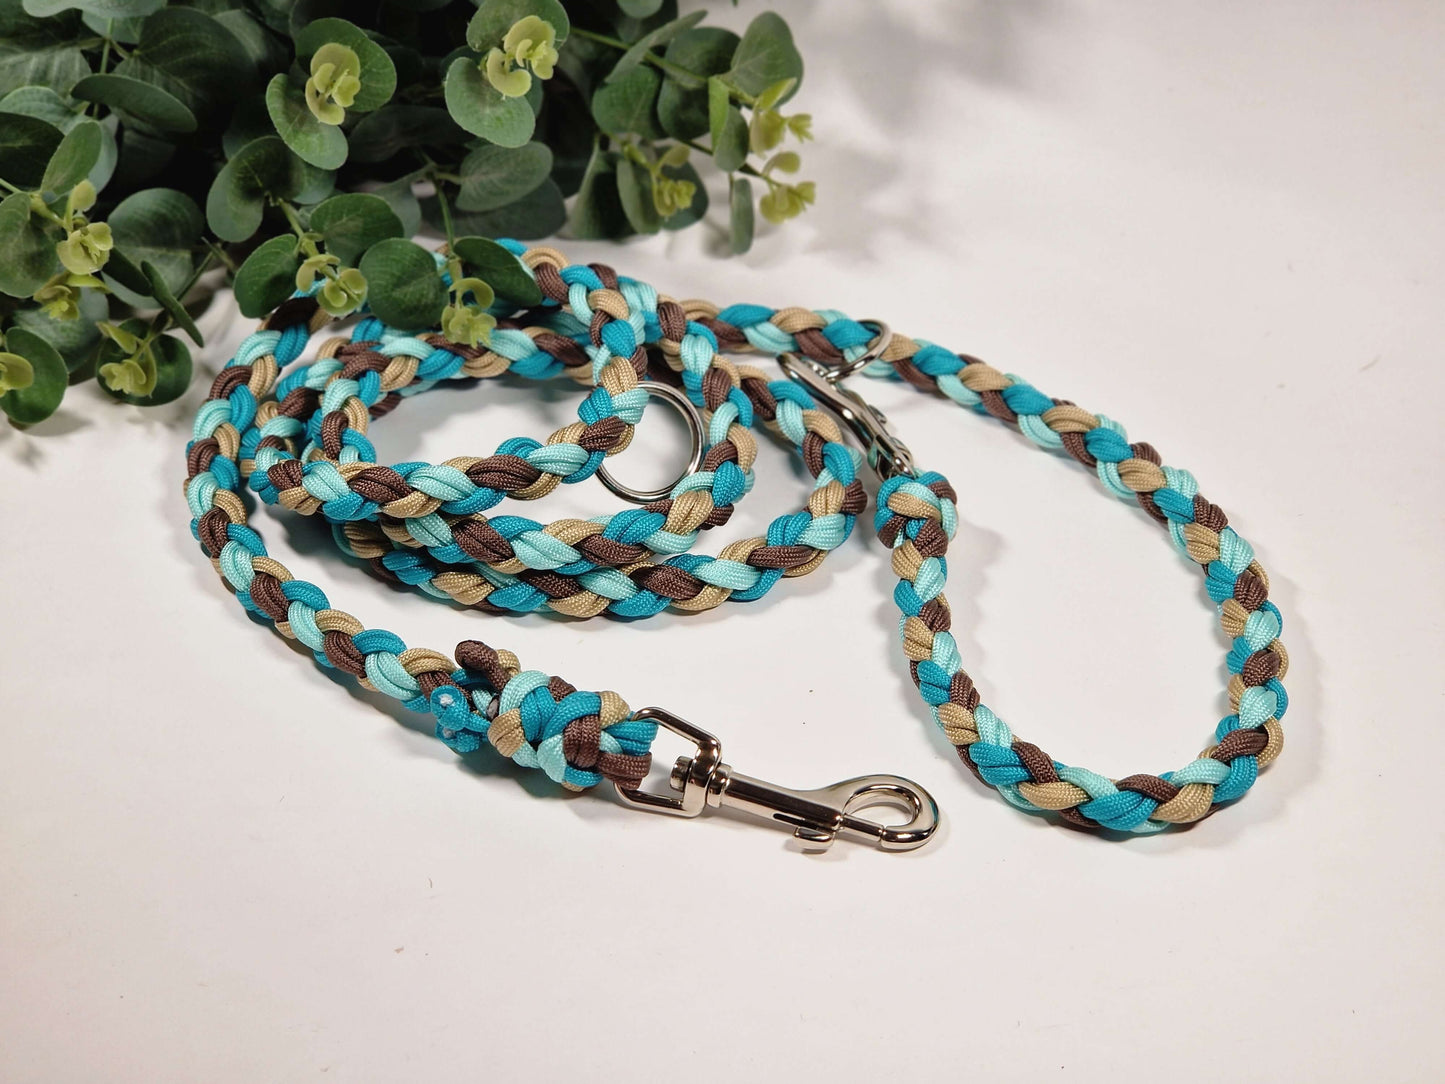 Paracord braided dog leash 2m - Sea sand